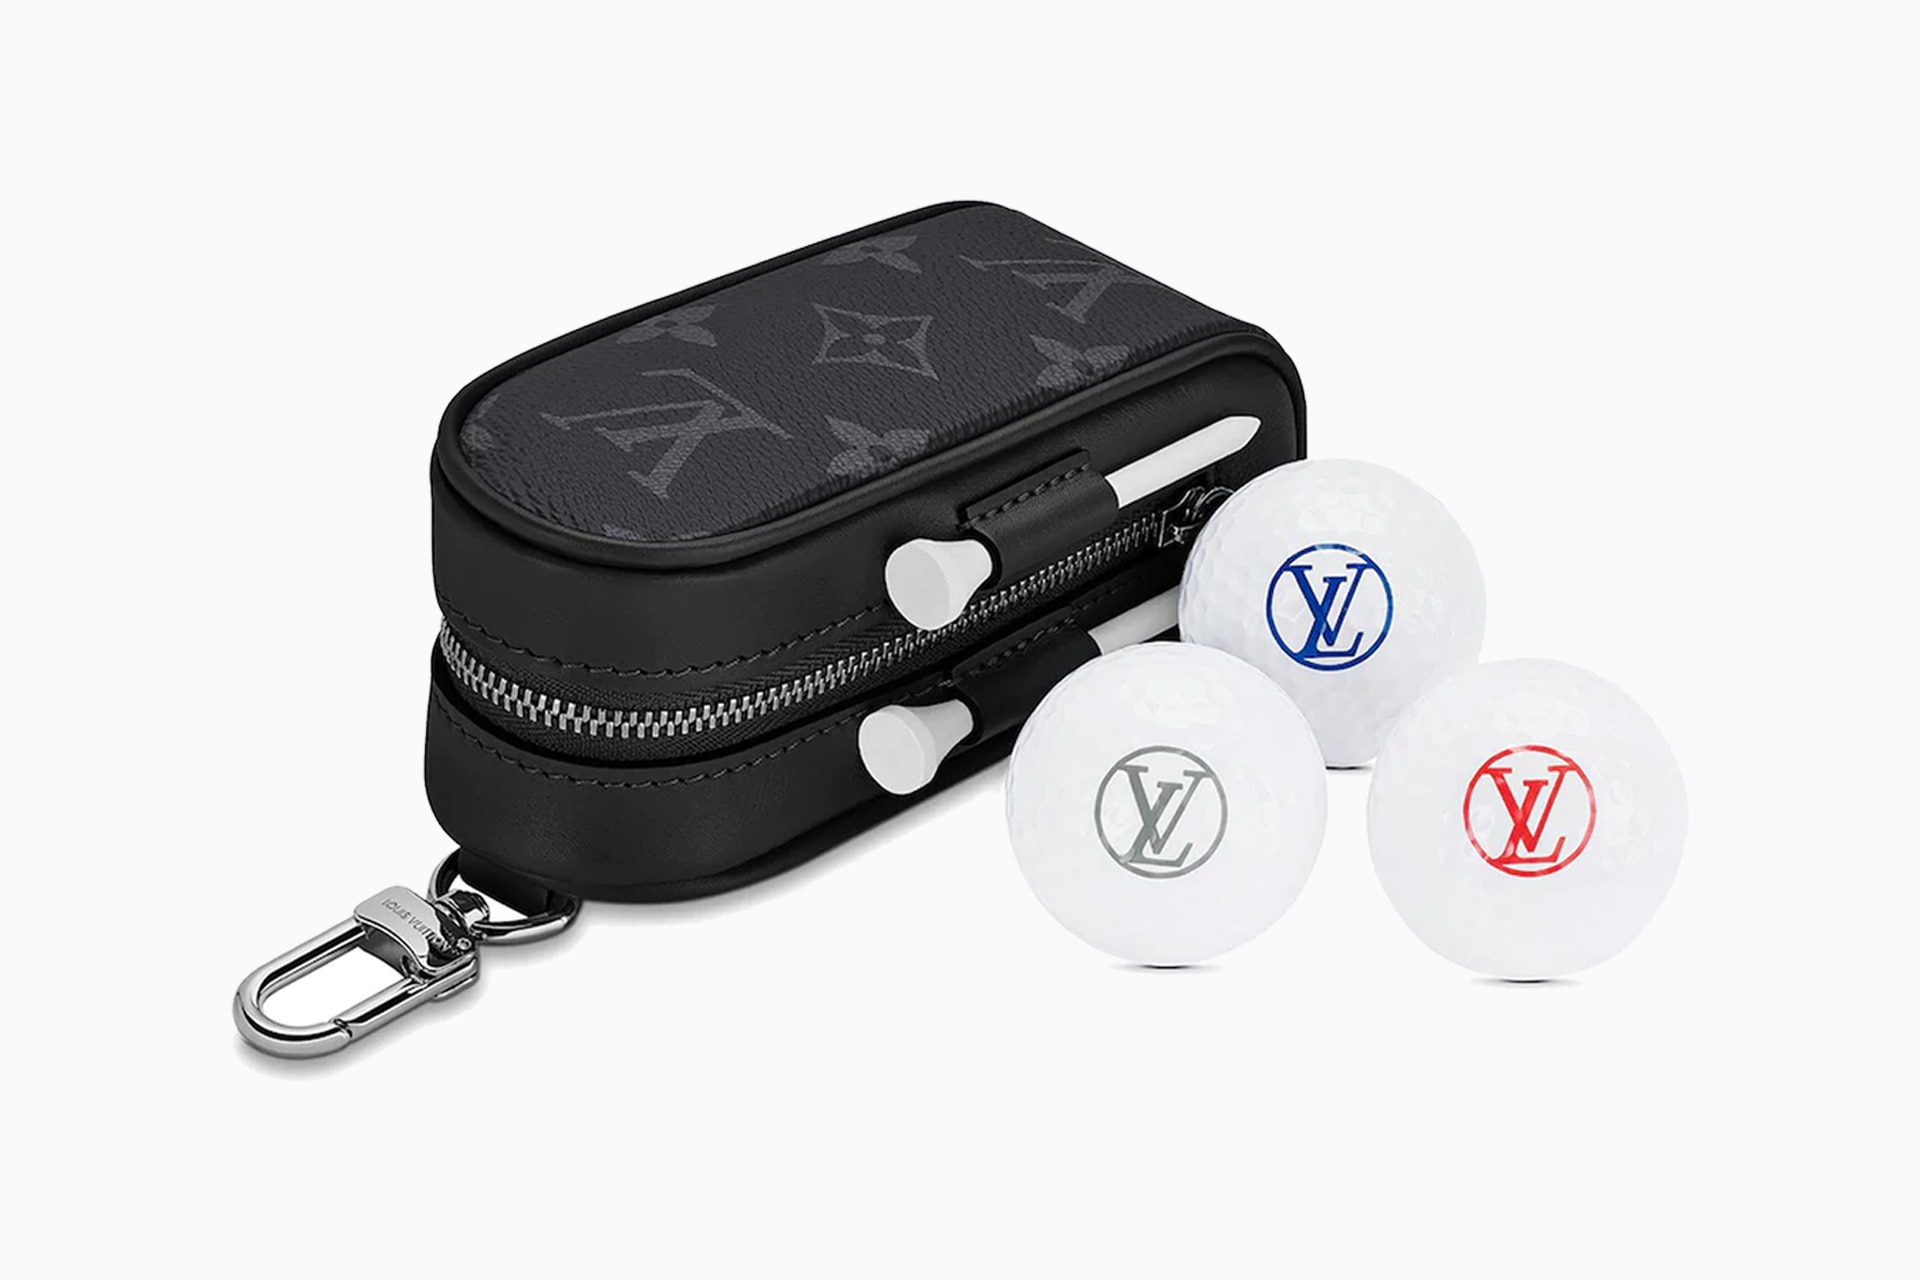 Louis Vuitton Just Dropped A $1,200 Set Of Golf Accessories - GQ Australia